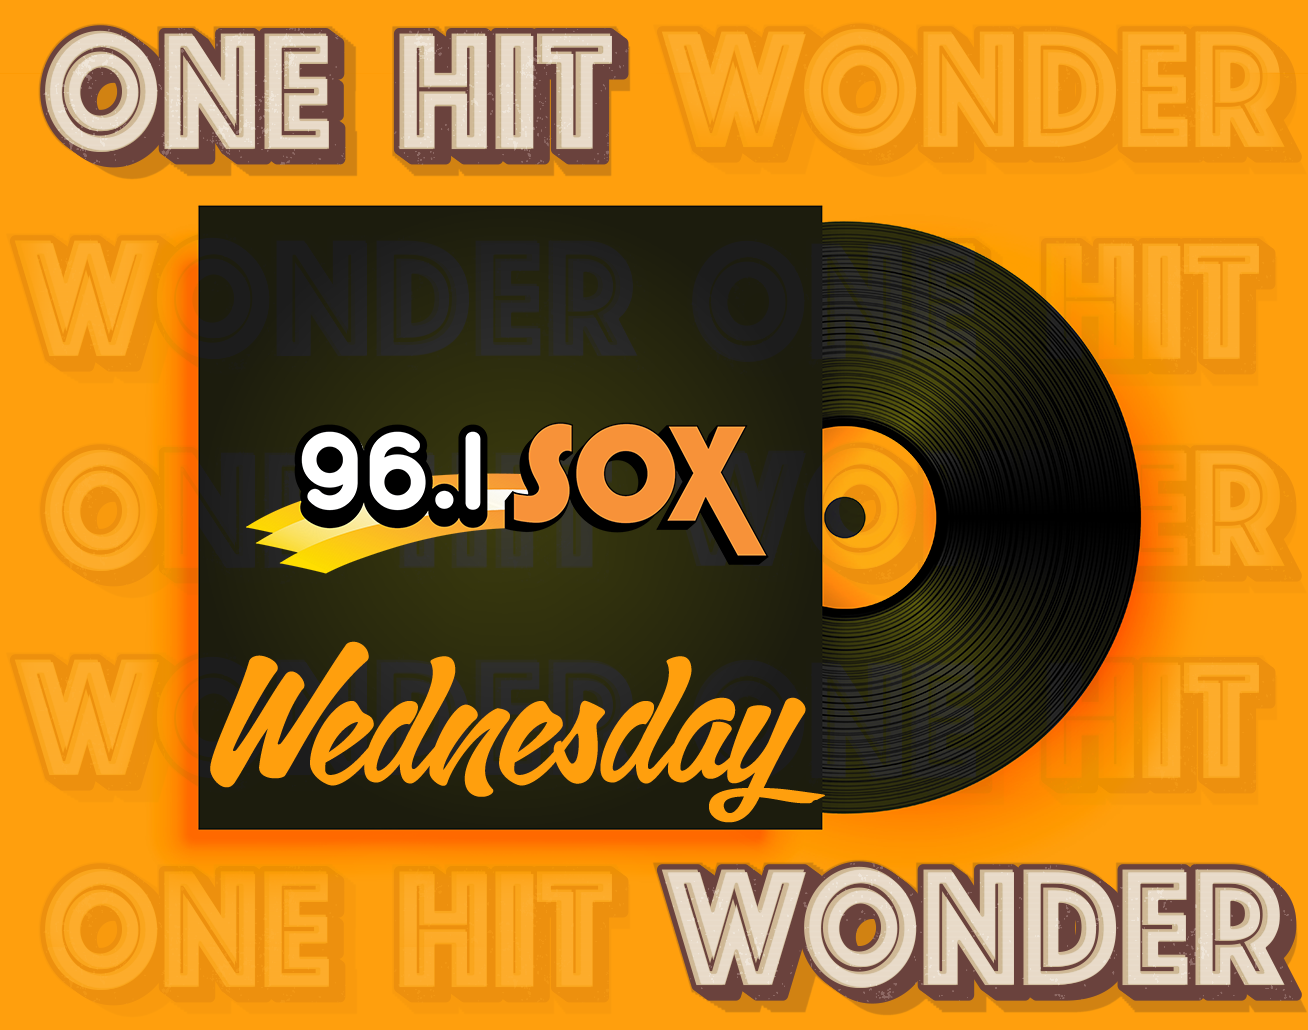 One Hit Wonder Wednesday on 96.1 SOX